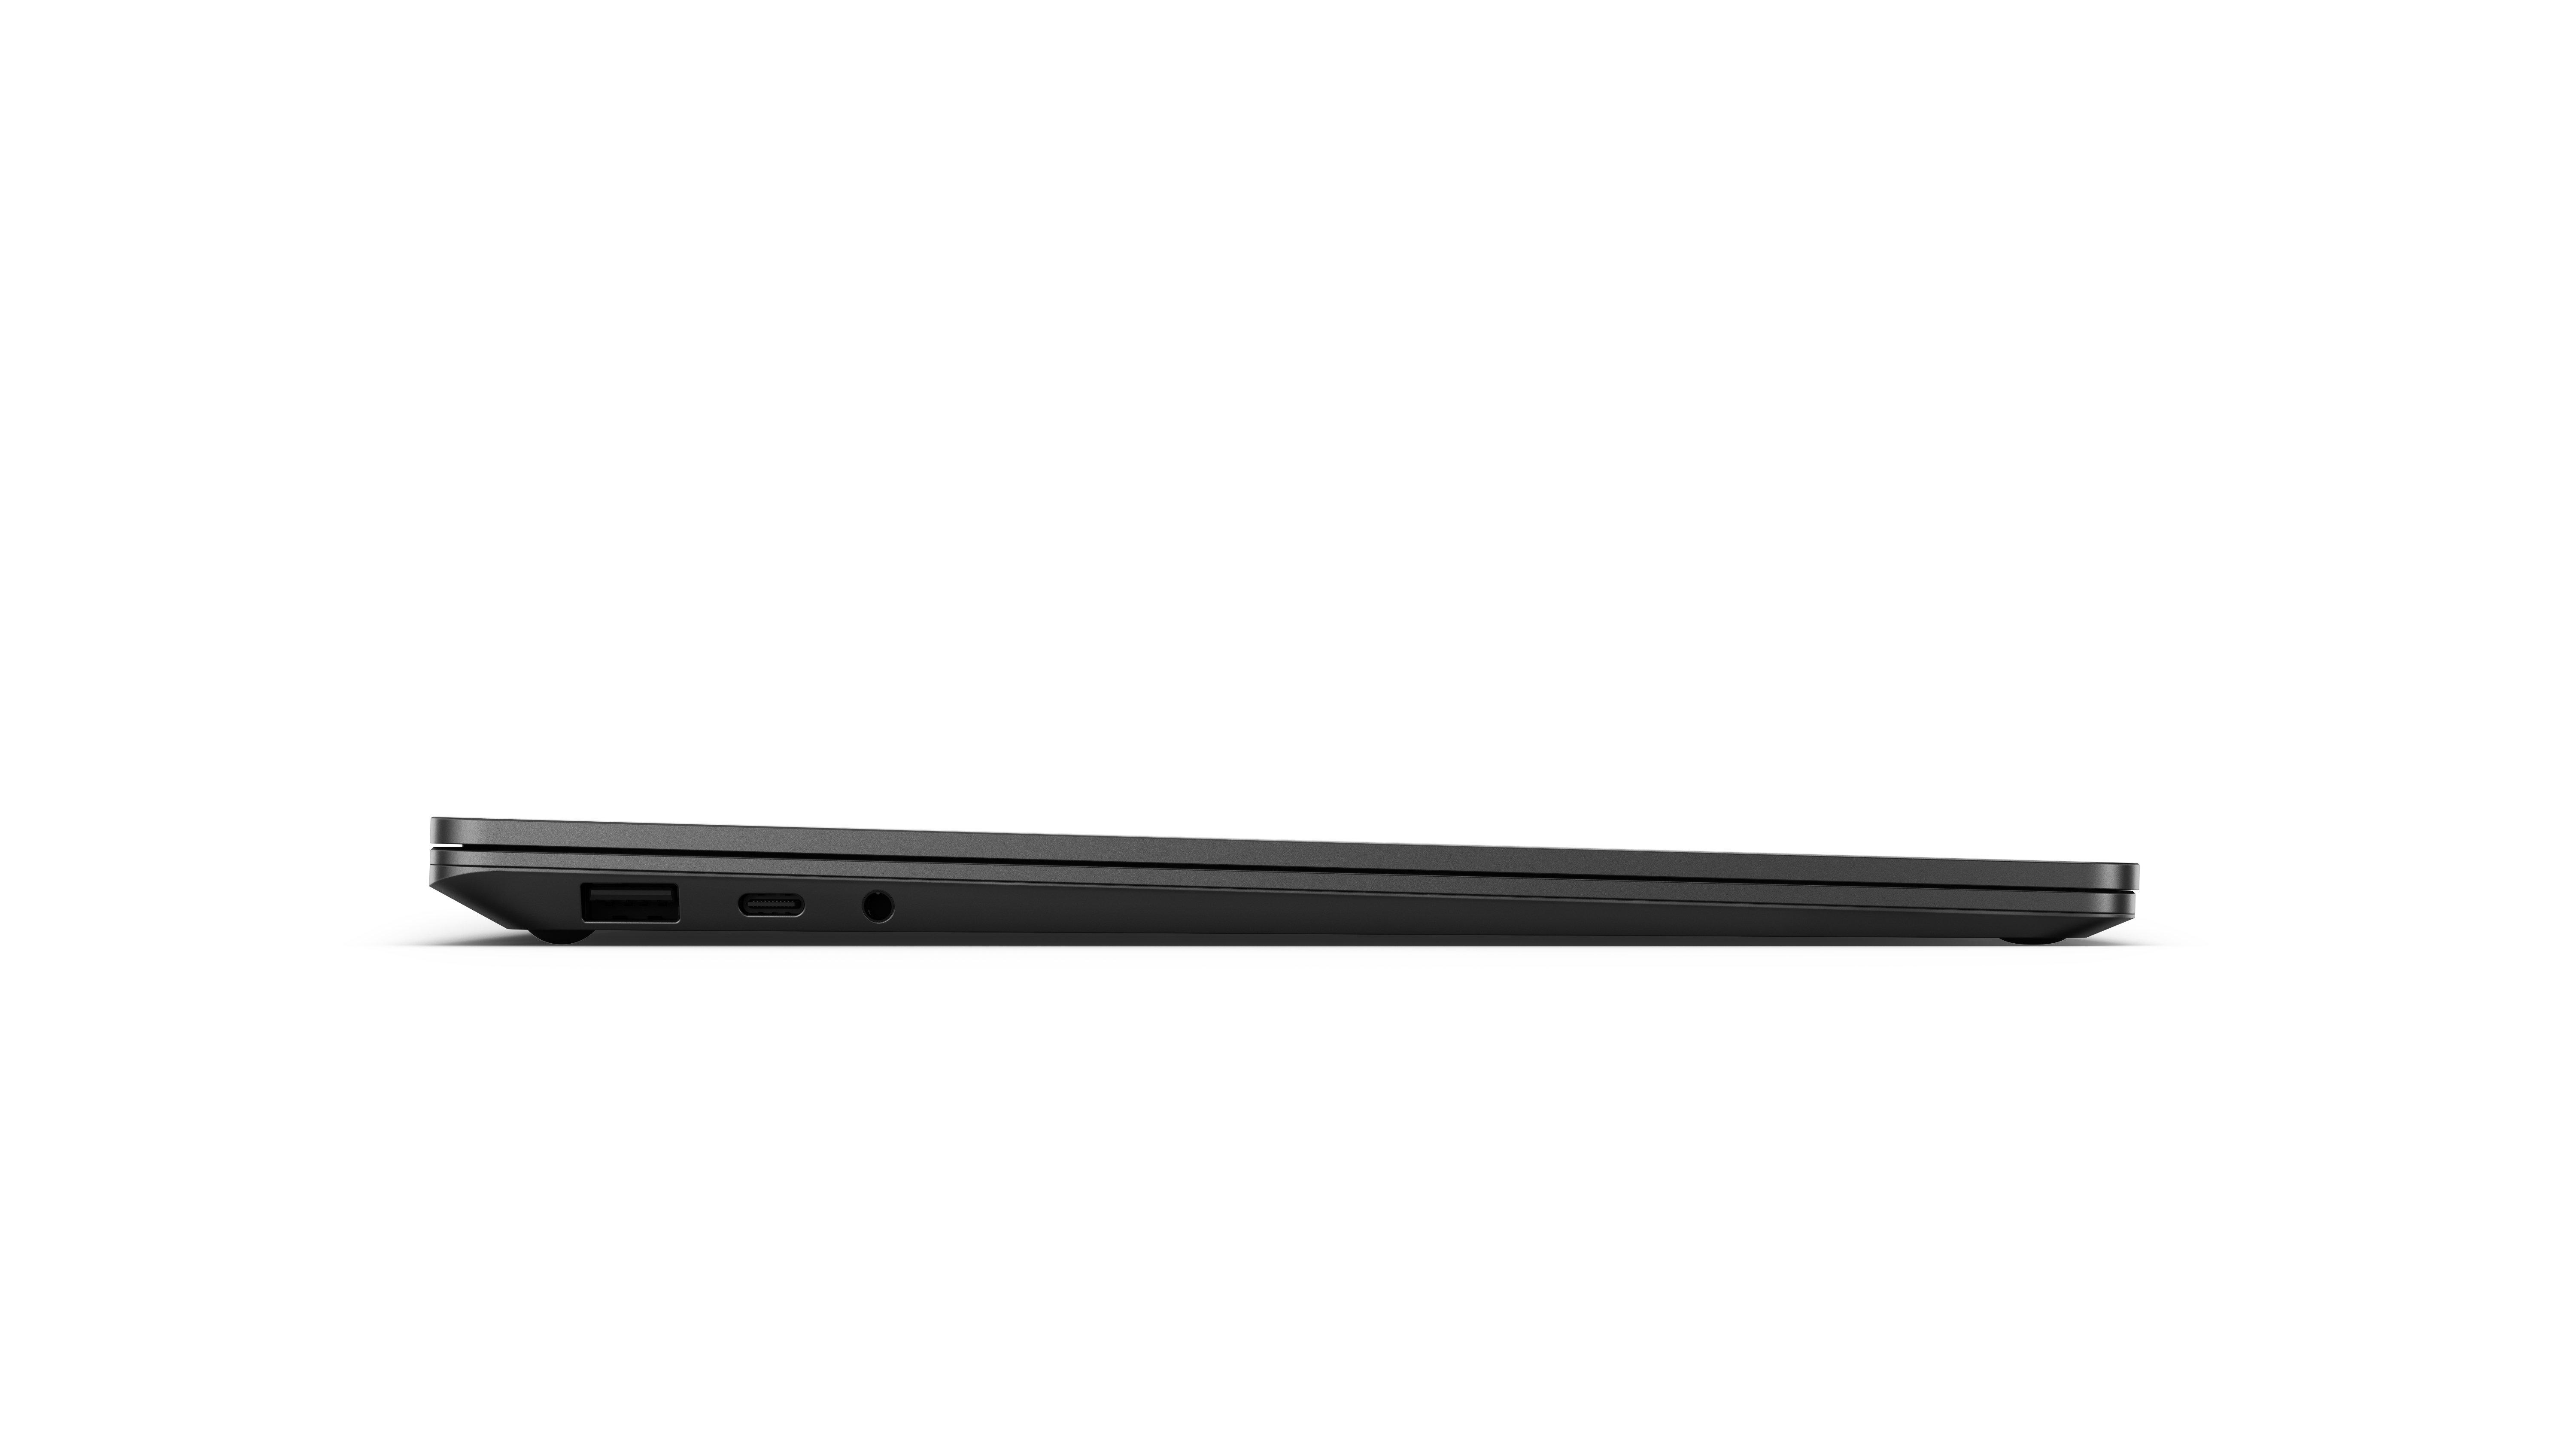 Microsoft  Surface 5 for Business (13.5", i5, 8GB, 256GB SSD, Intel Iris Xe, W10P) 